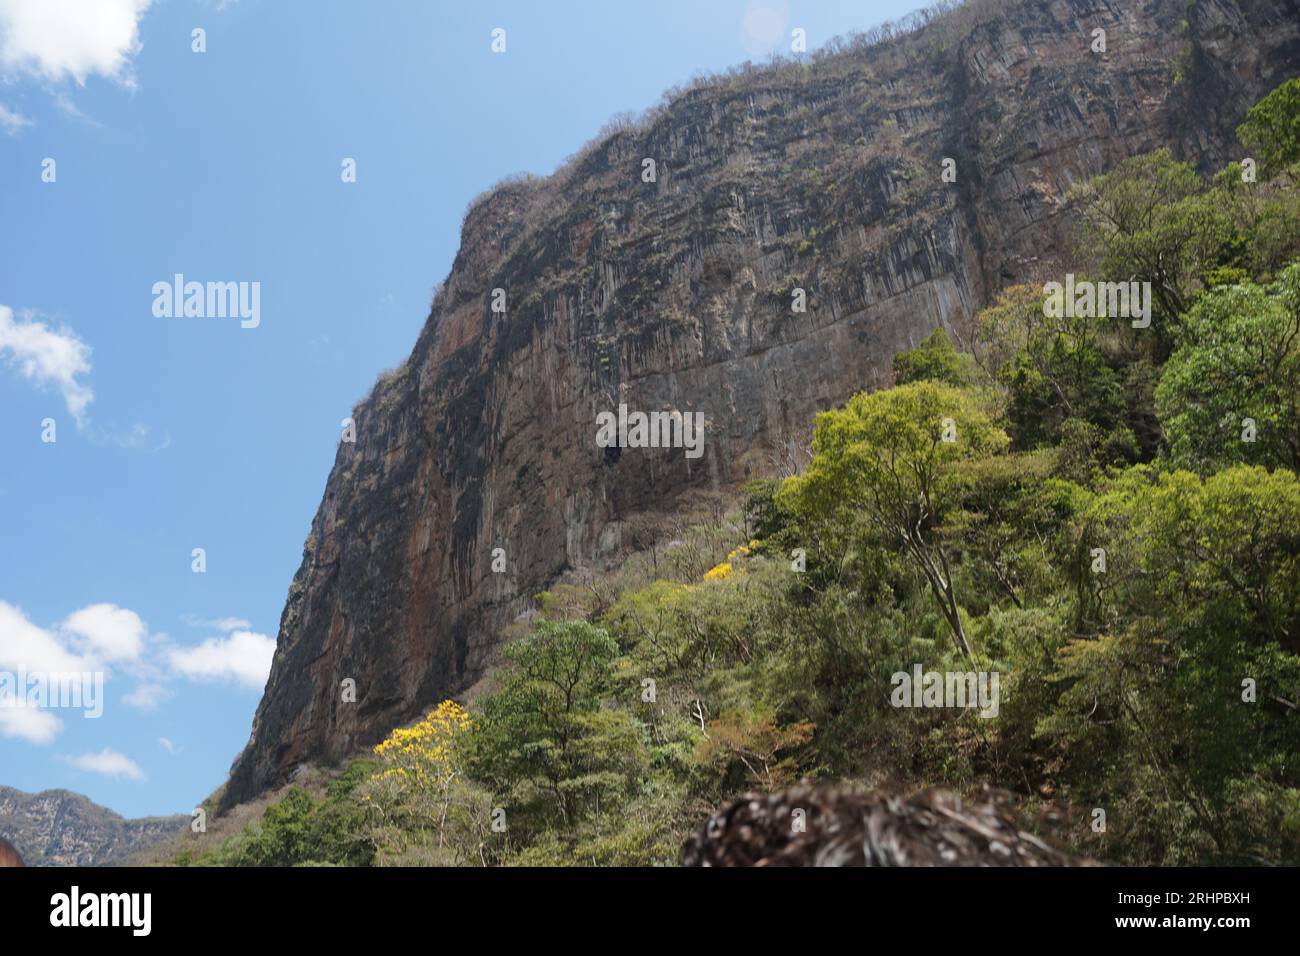 Mountain, sumidero canyon, hair, trees, vegetation, sky at chiapas, mexico Stock Photo